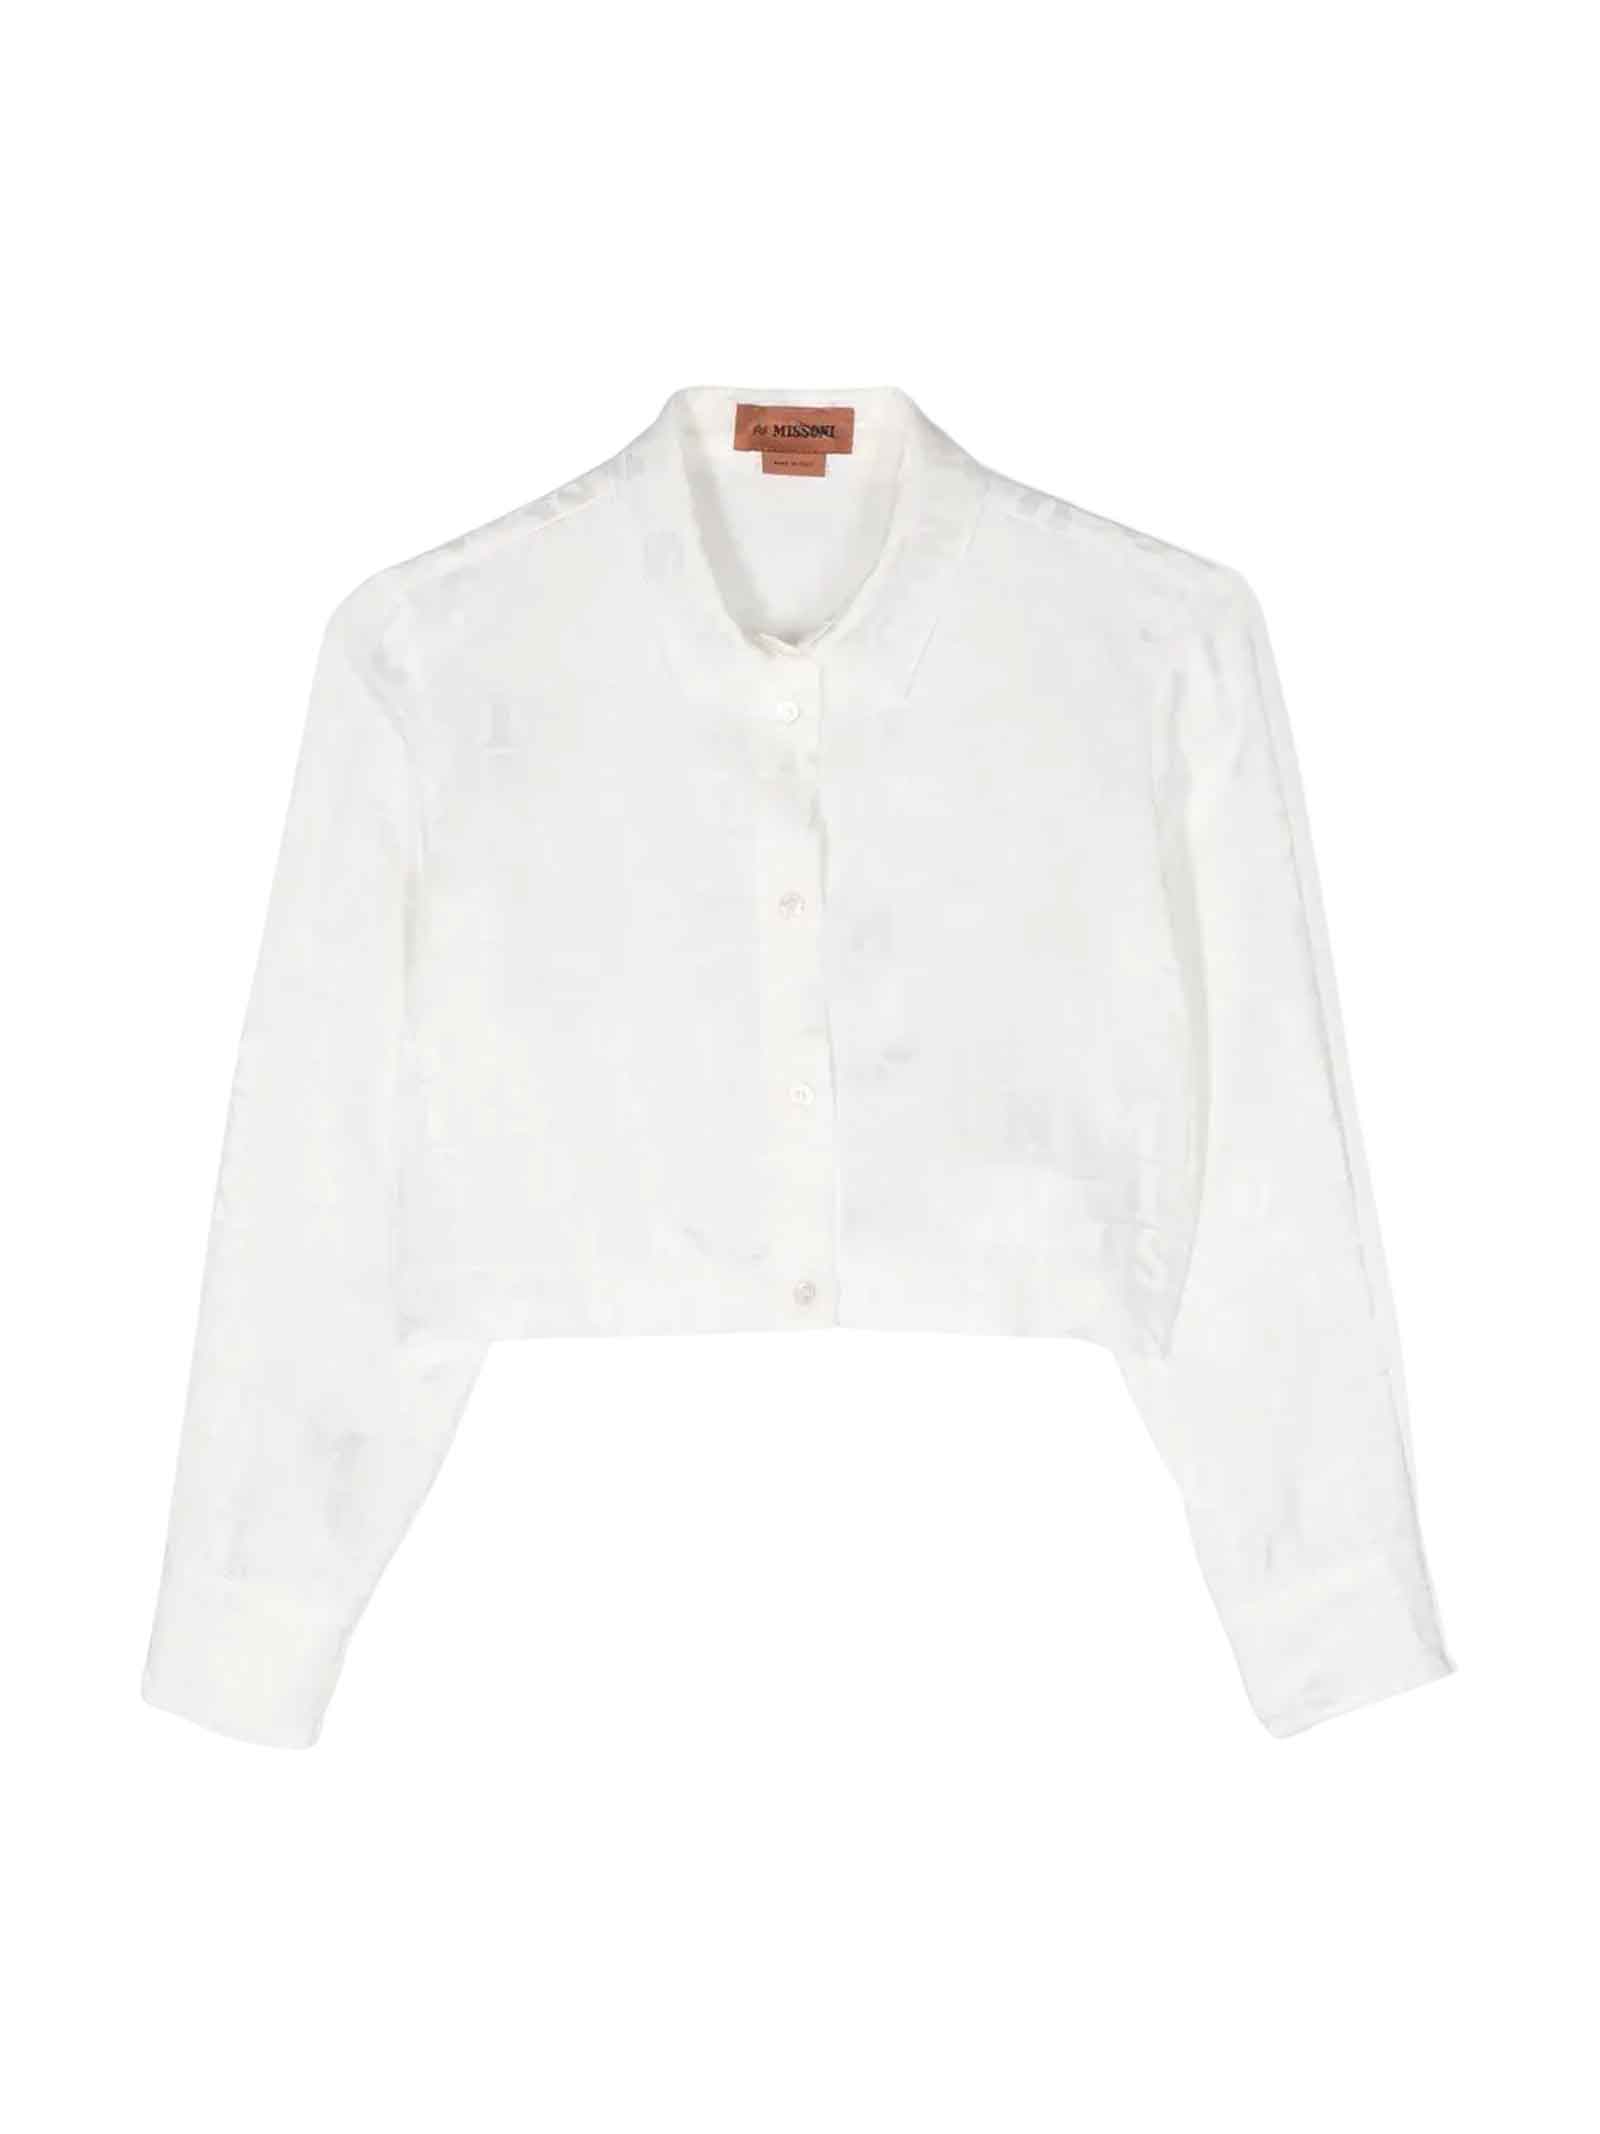 Missoni Kids' White Shirt Girl In Bianco